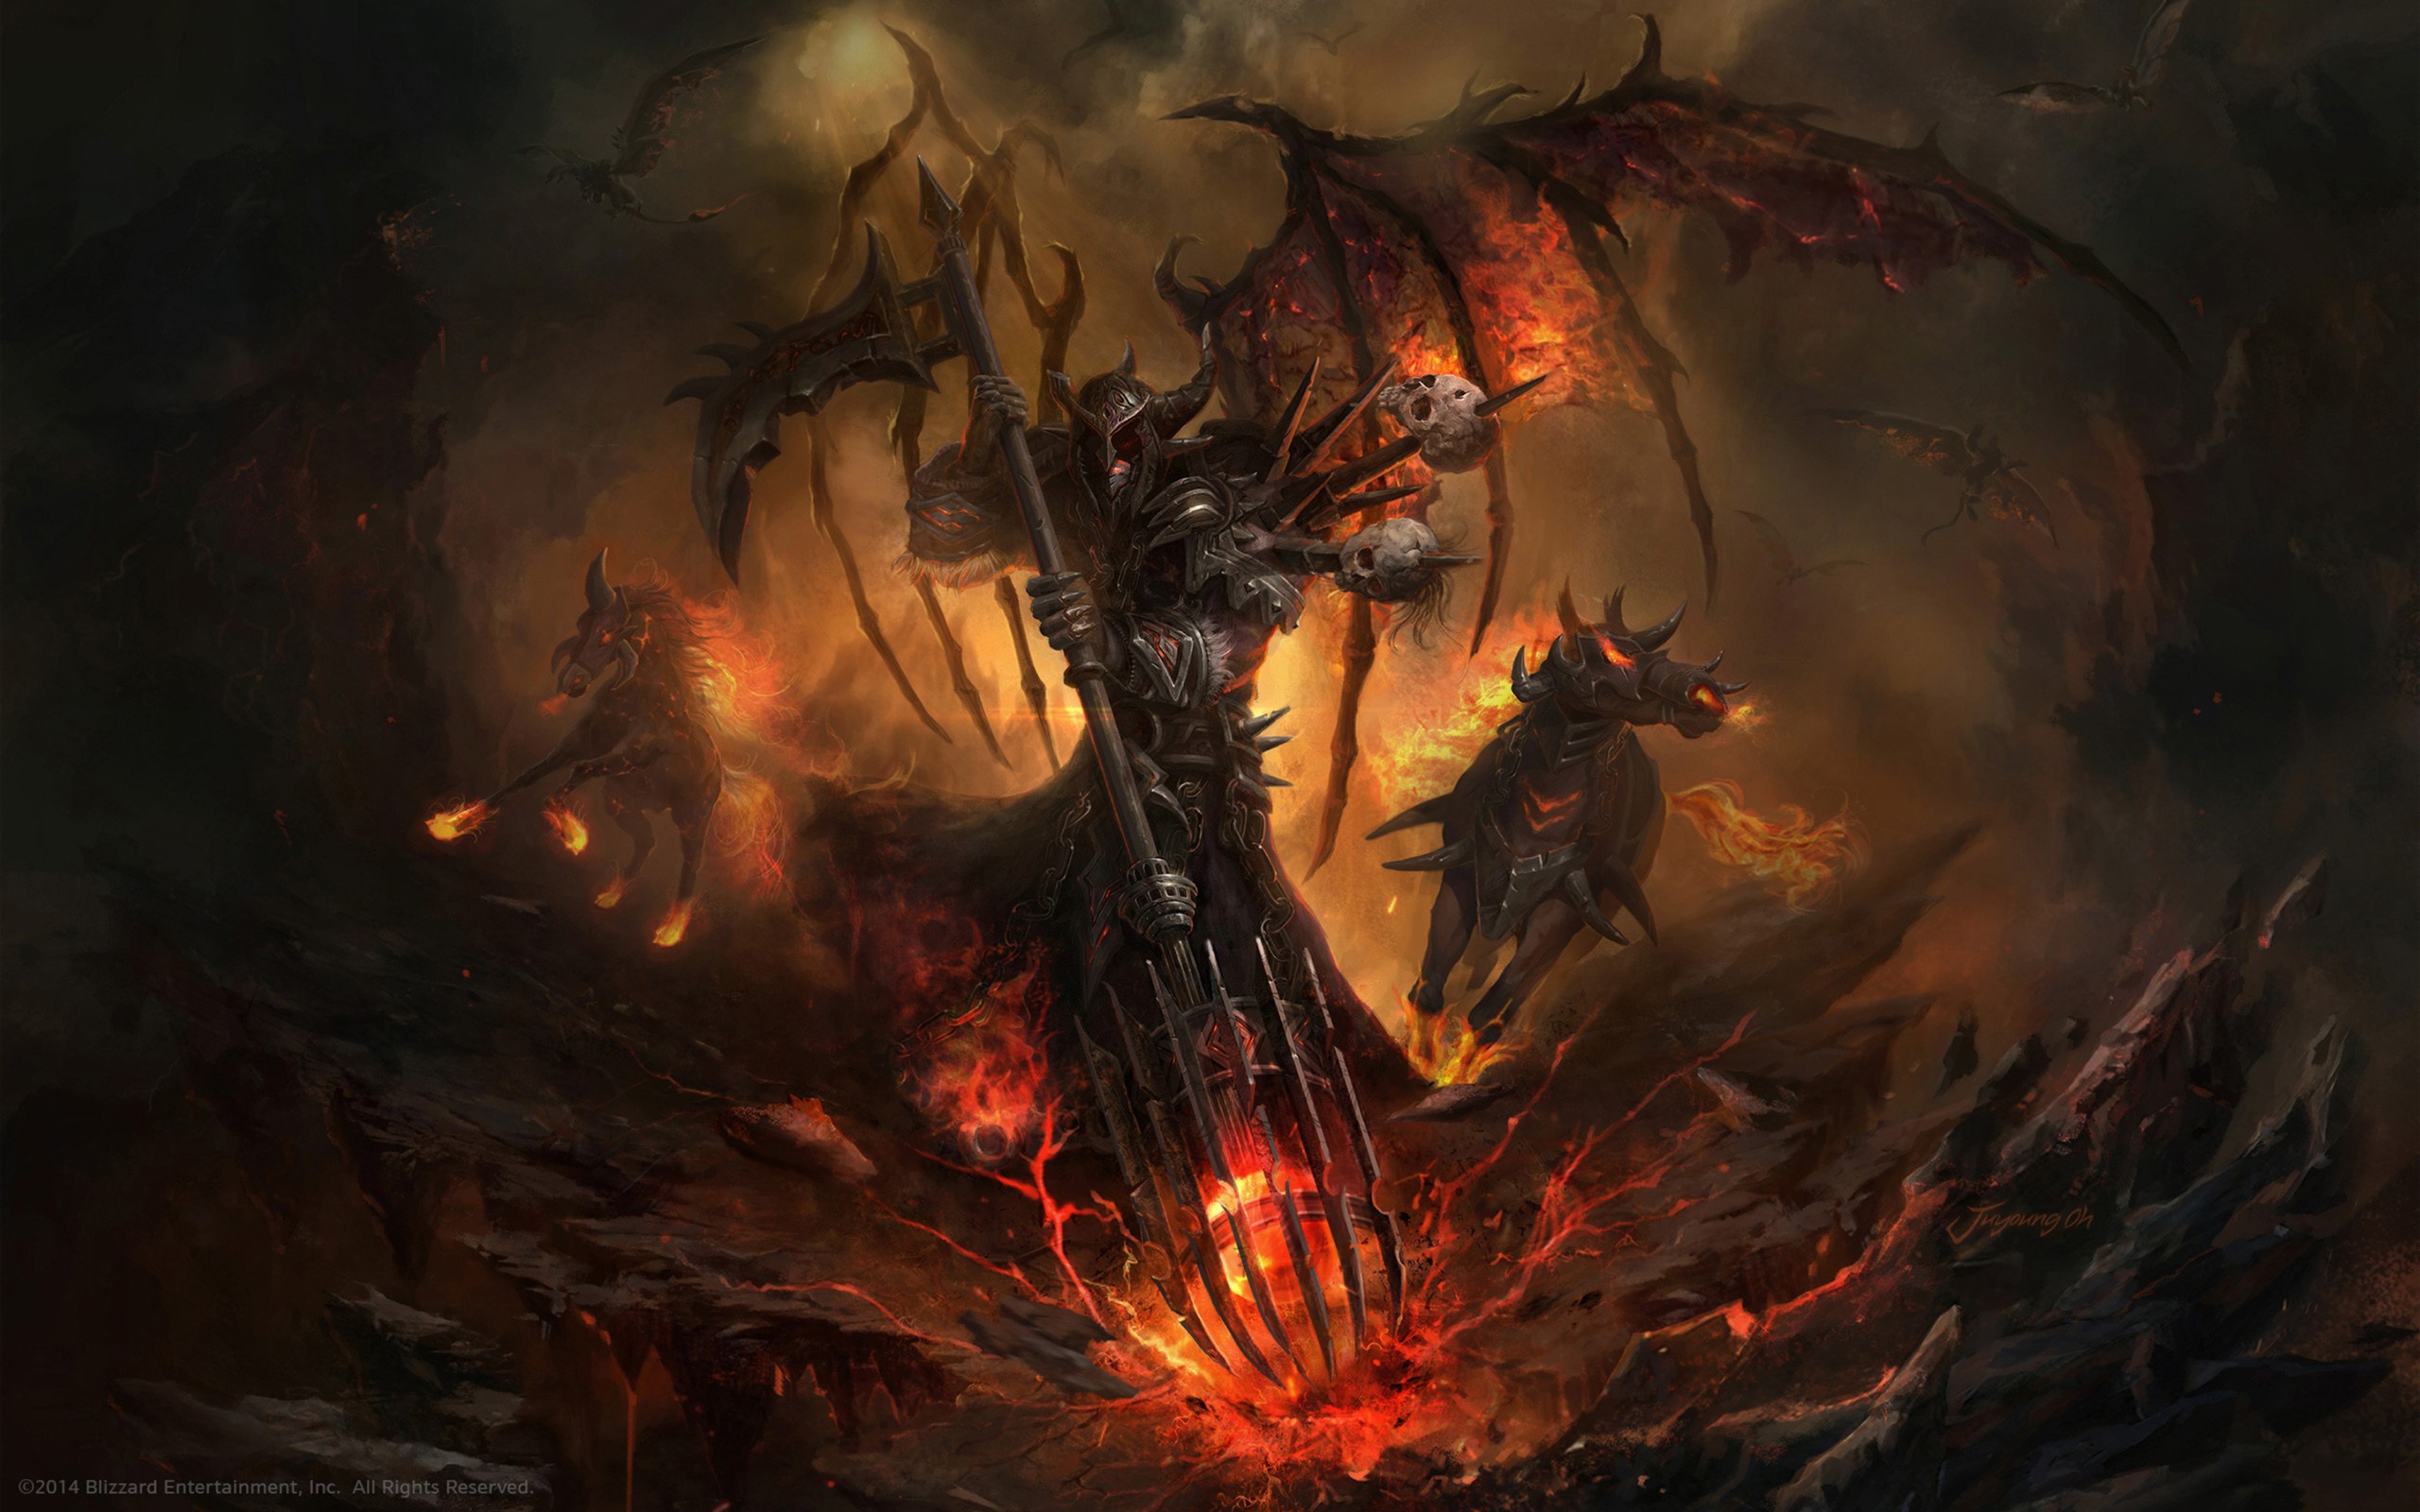 General 2560x1600 World of Warcraft Warlock warlocks video game art PC gaming 2014 (Year) fantasy art Blizzard Entertainment digital art